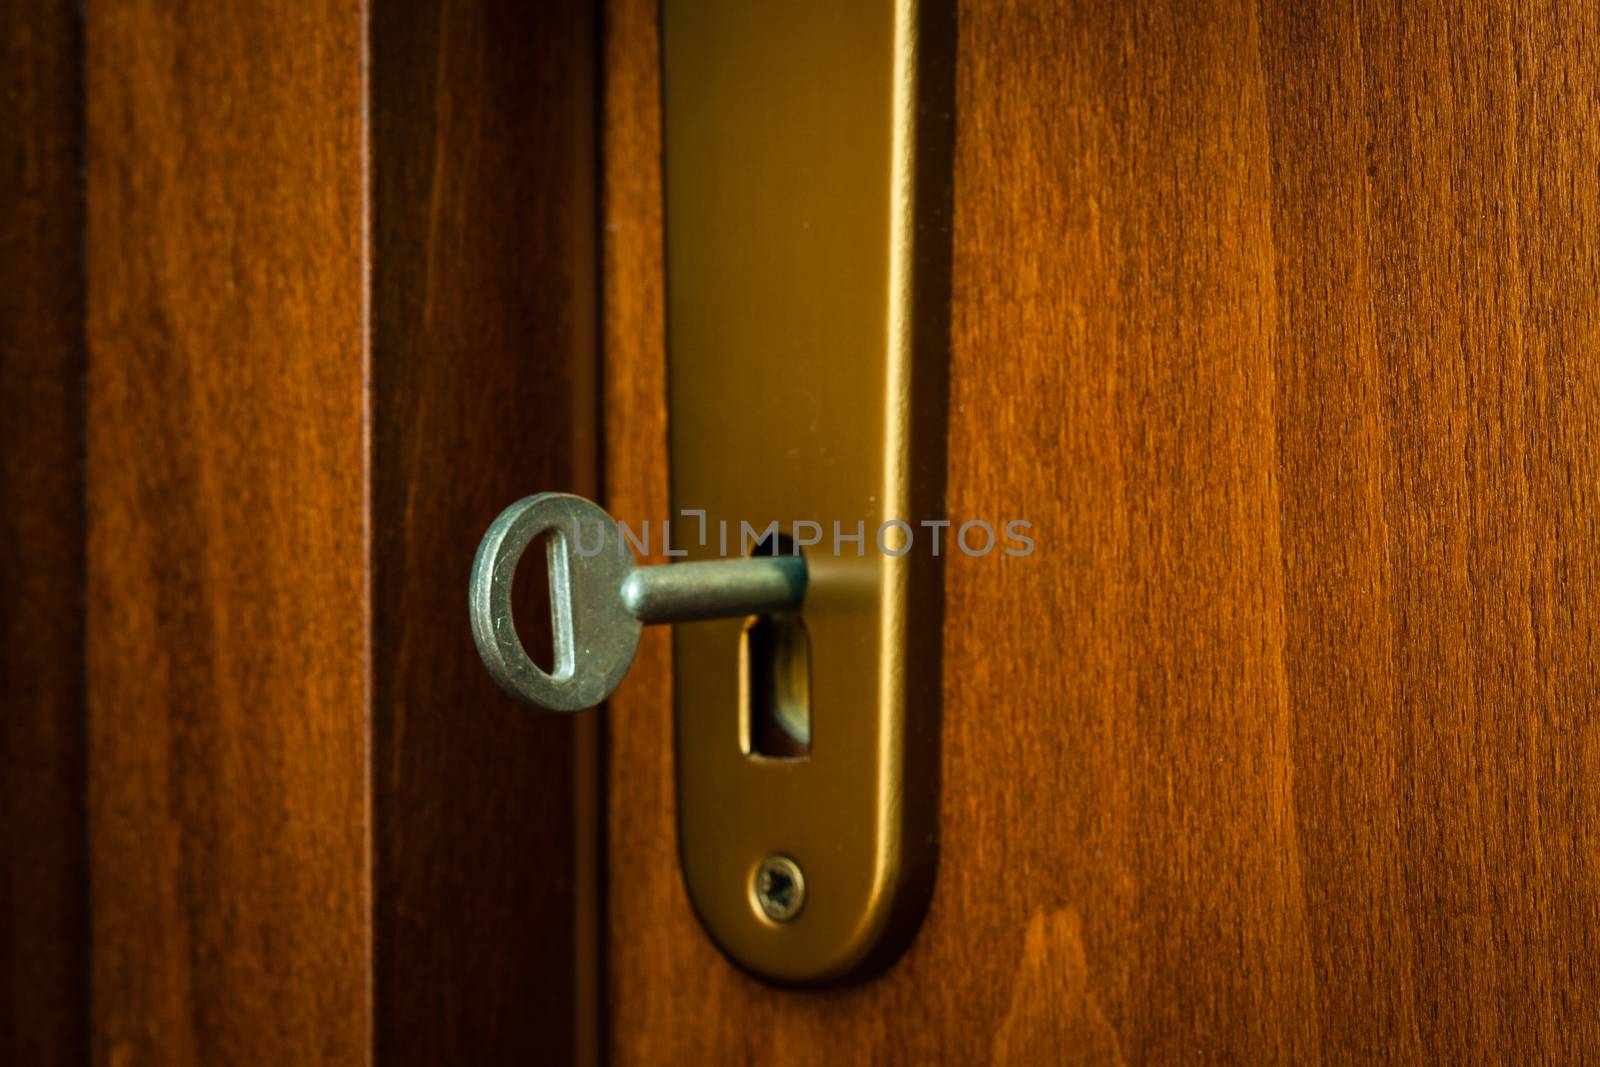 Key in keyhole by furo_felix